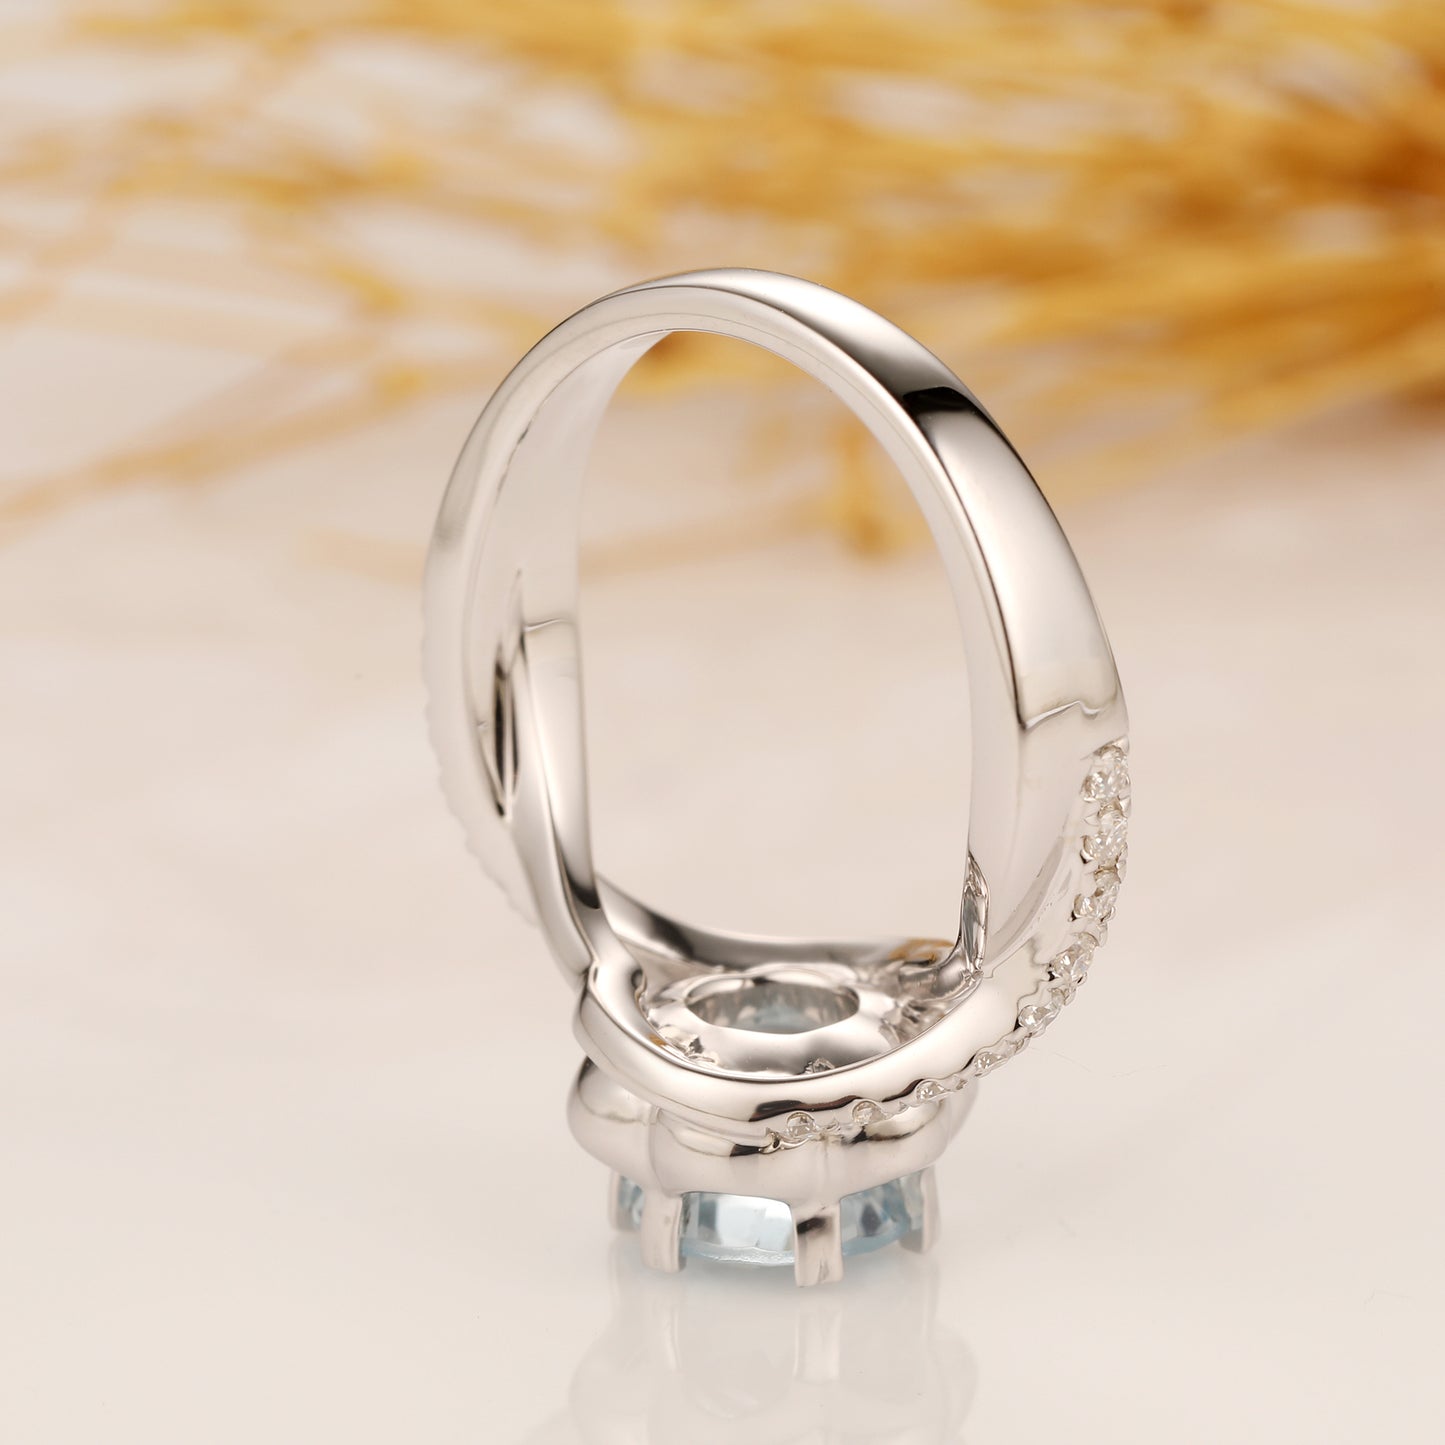 Natural Aquamarine Ring, Floral Round Cut 1CT Aquamarine Ring, Split Shanks Accents 14k White Gold Engagement Ring